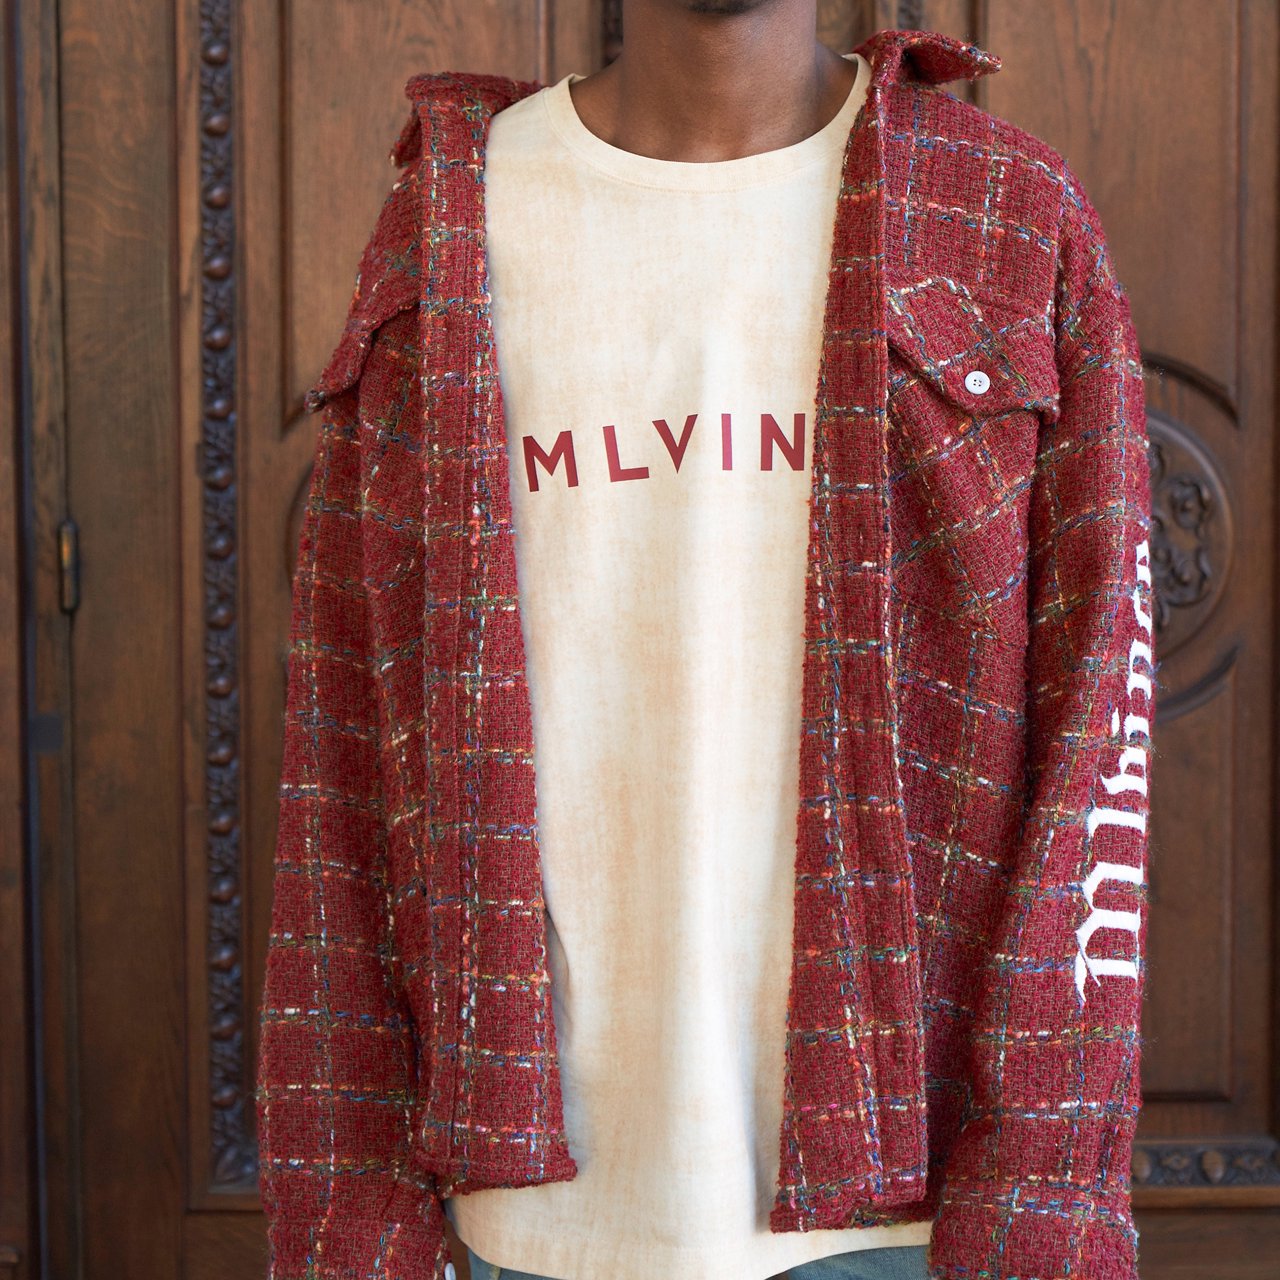 MLVINCE (メルヴィンス) 24SS/春夏
EMBROIDERY CHECK TWEED SHIRTS RED
チェックツイードシャツ
ストリートファッション